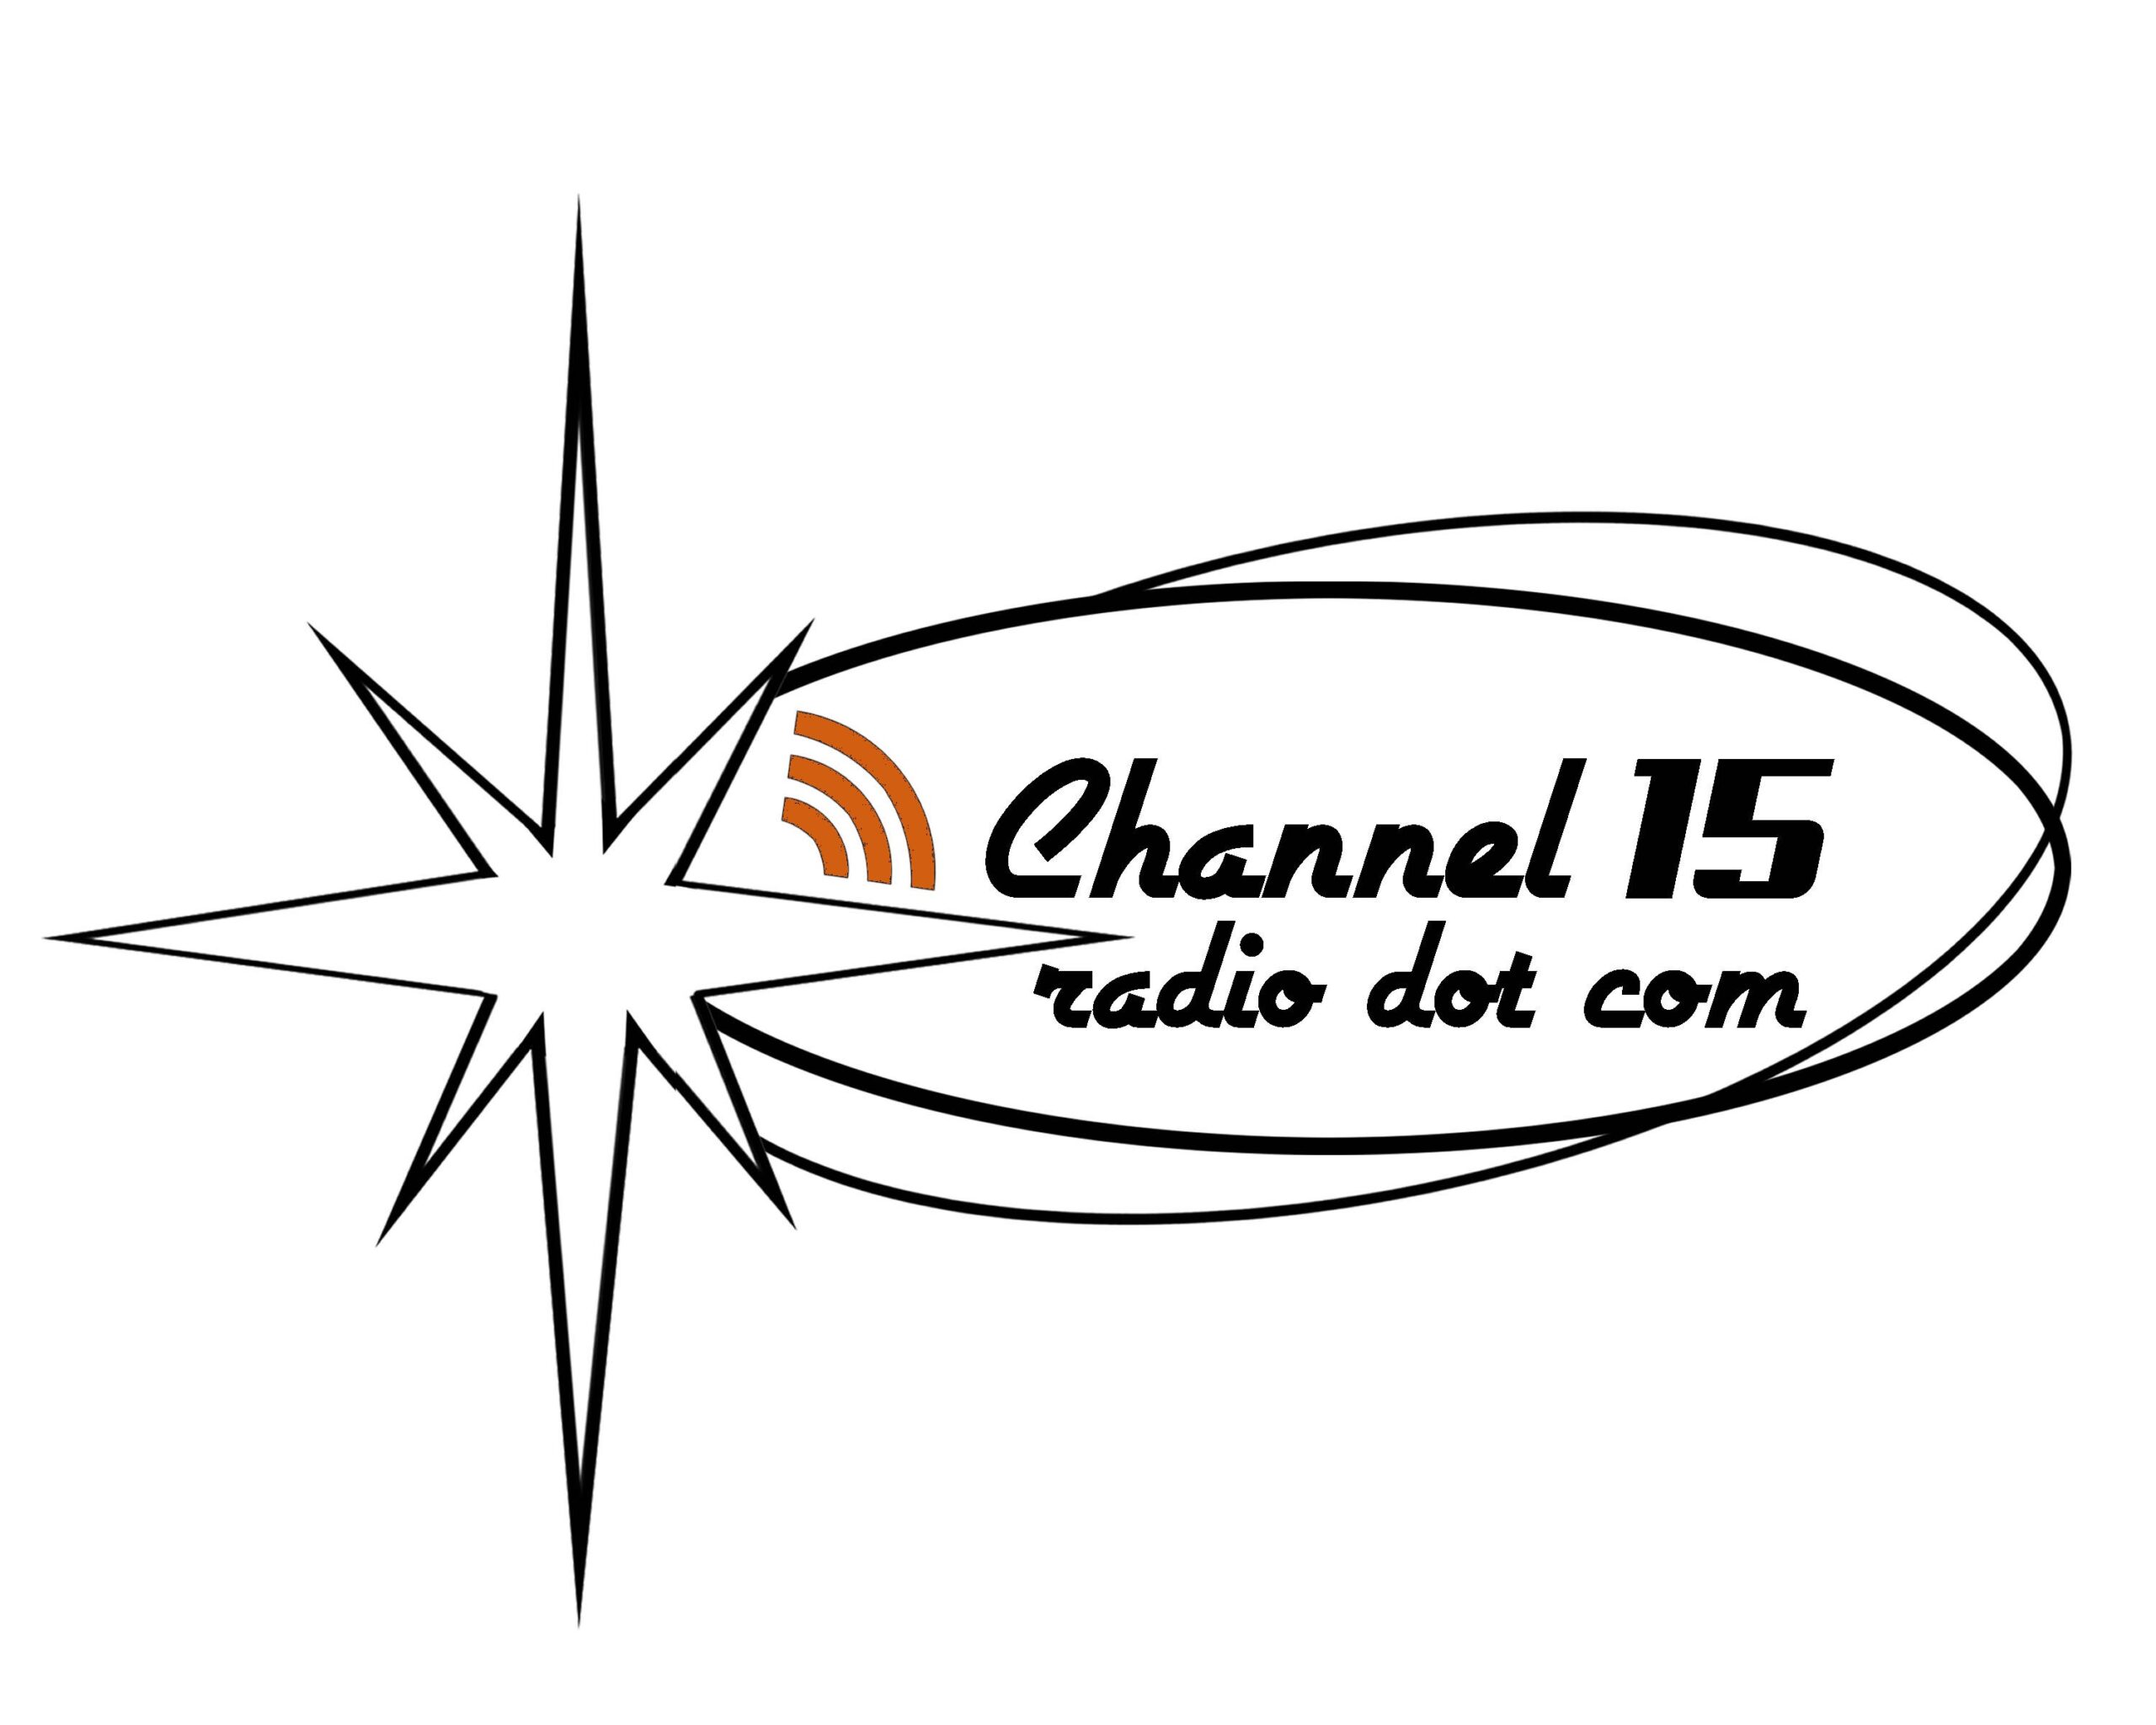 Channel 15 Radio dot com